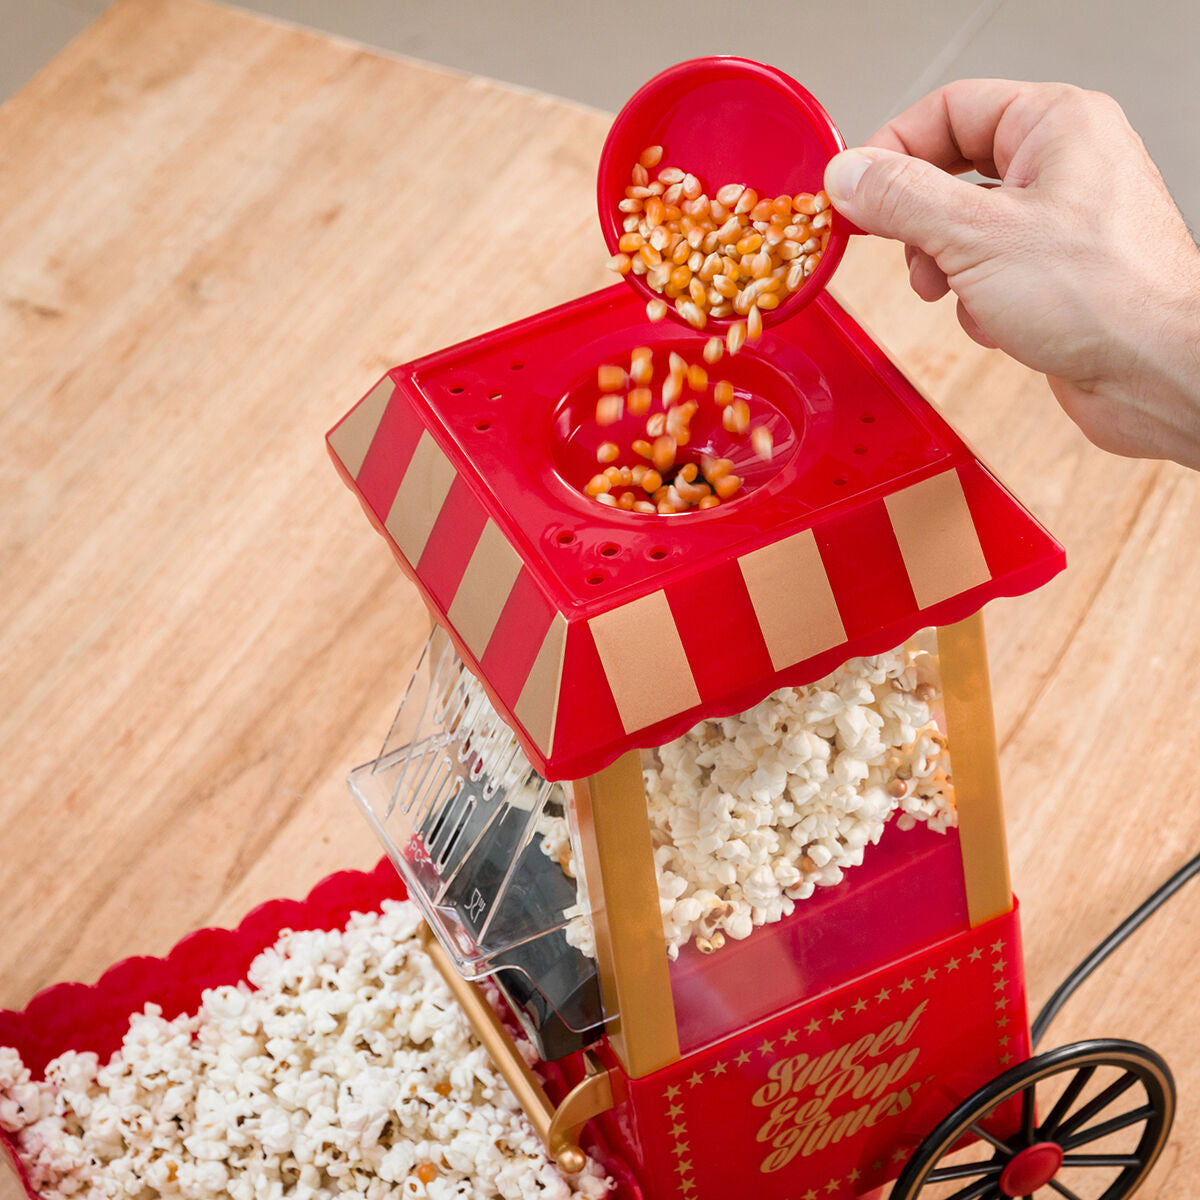 Kaufe Popcornmaschine Sweet & Pop Times InnovaGoods bei AWK Flagship um € 66.00